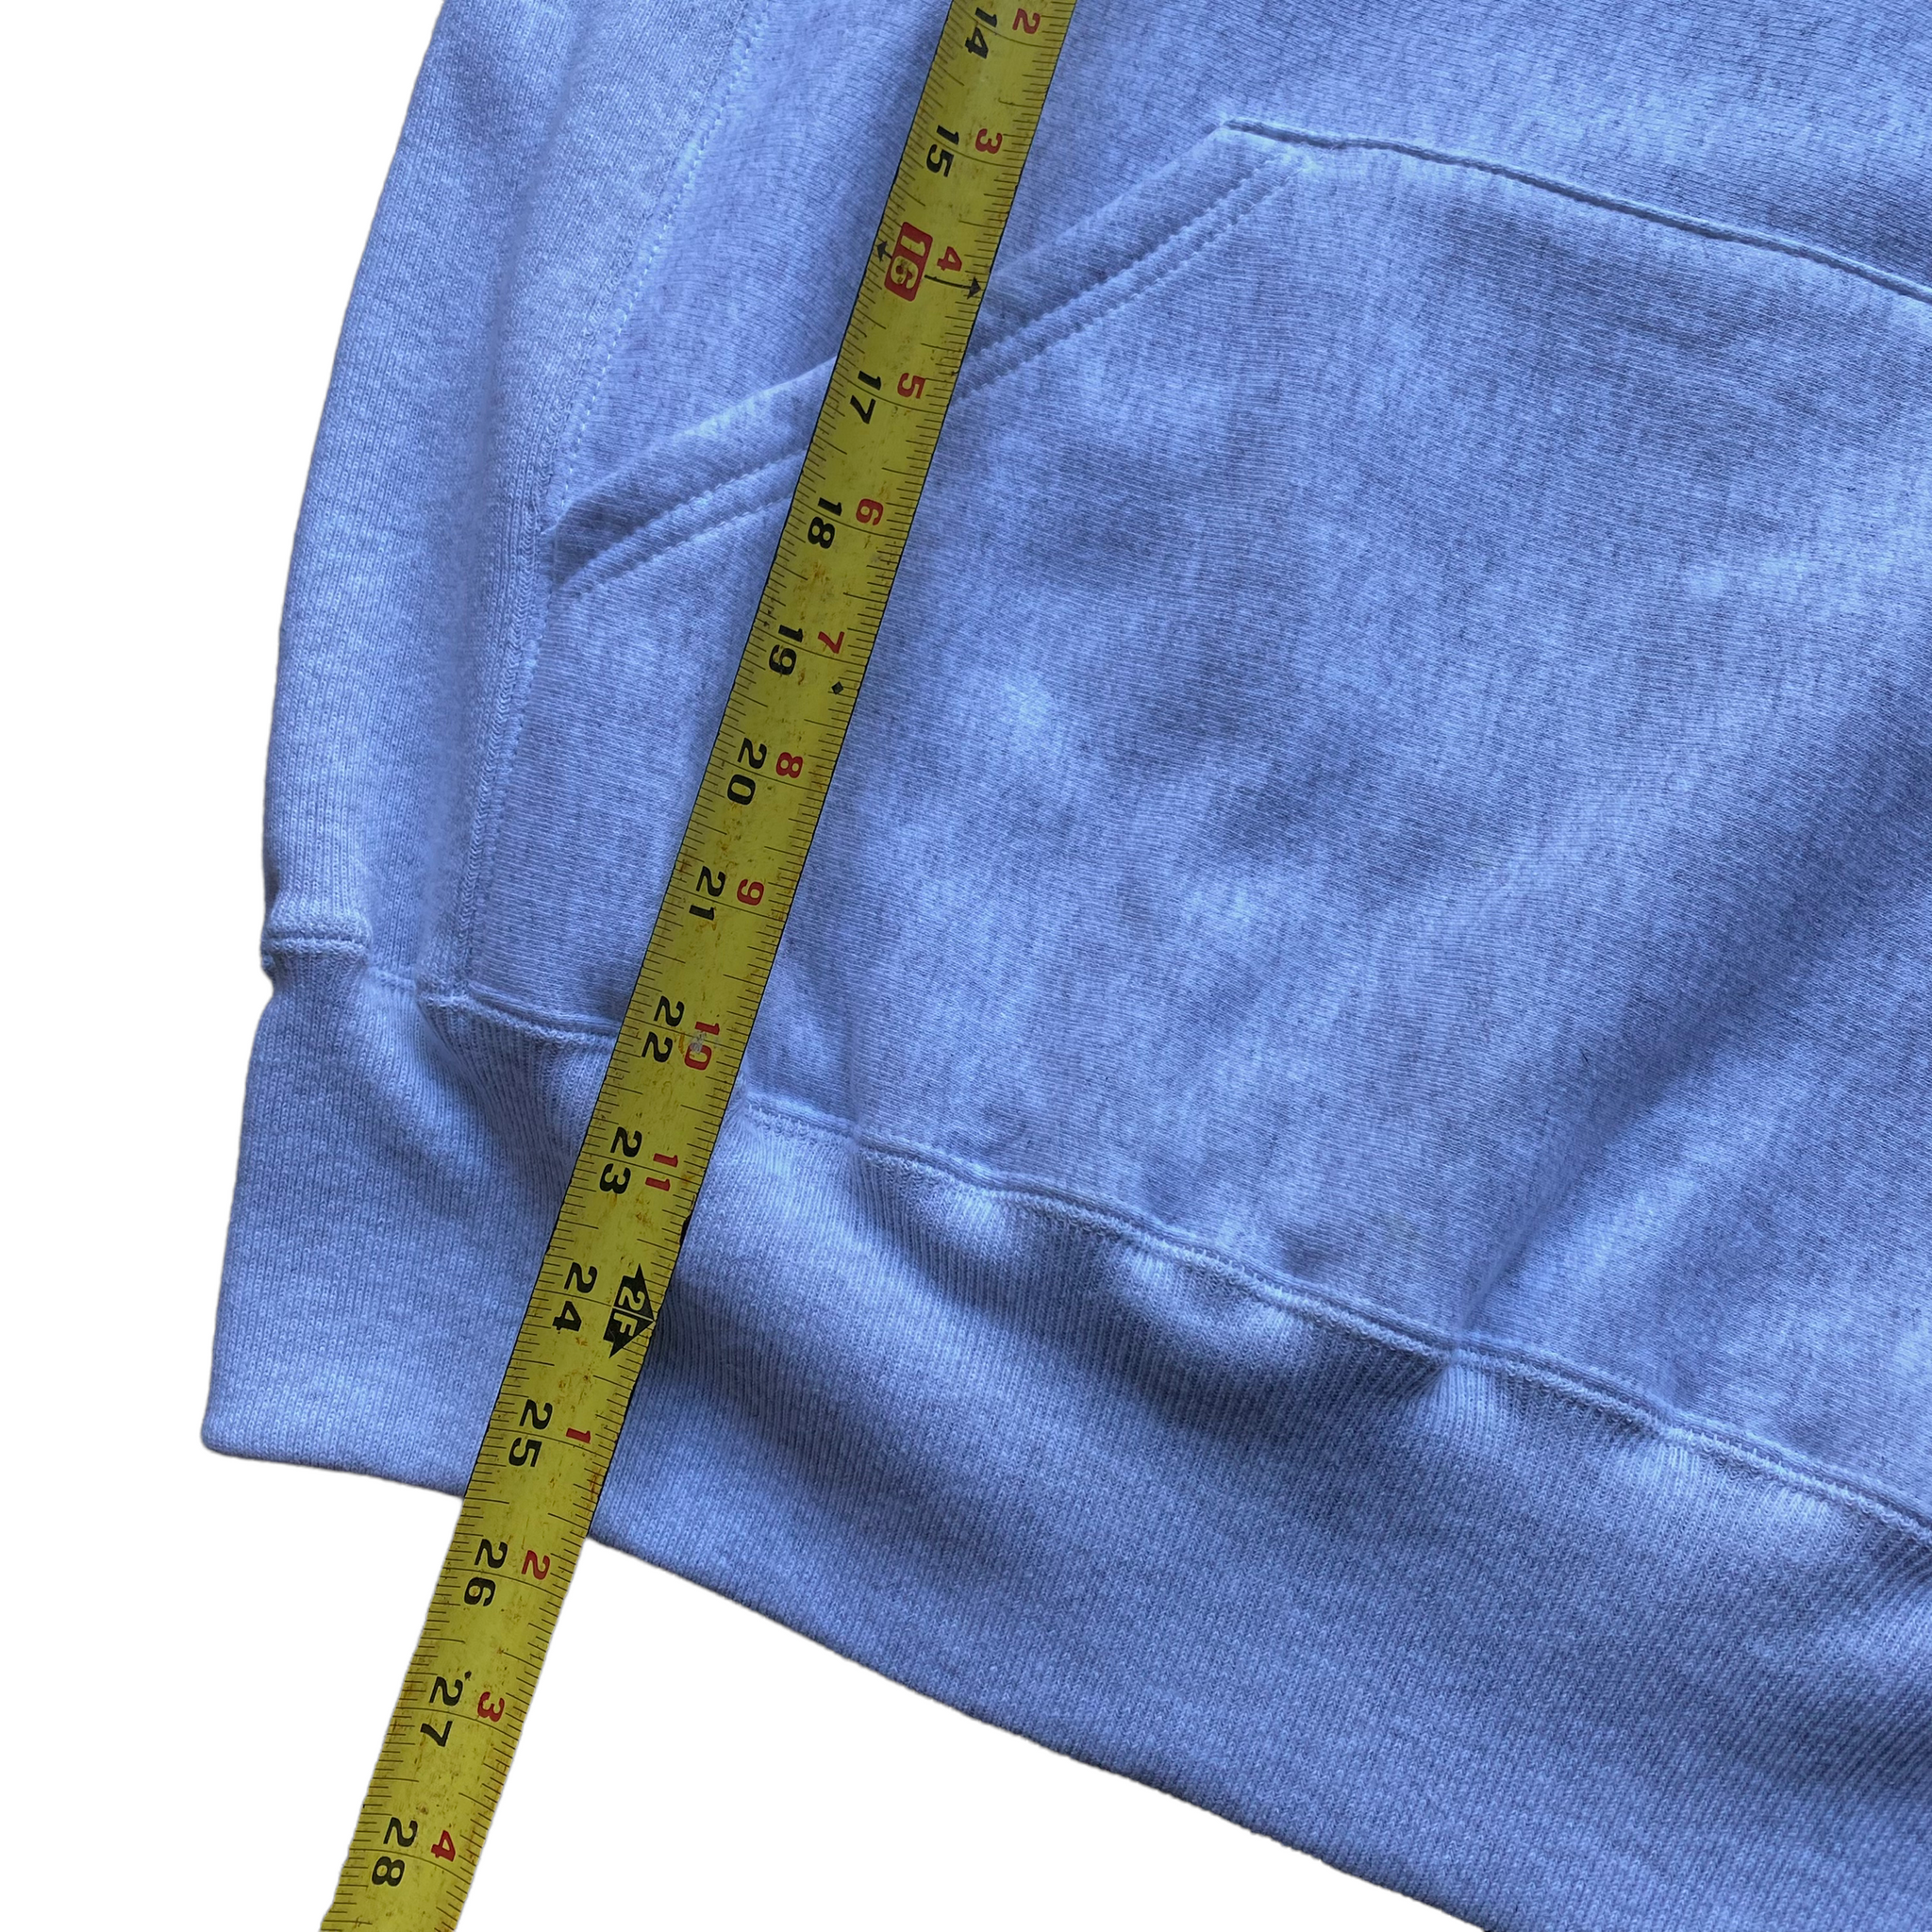 Kellsport heavyweight hooded sweatshirt  Made in usa massachusetts  medium fit